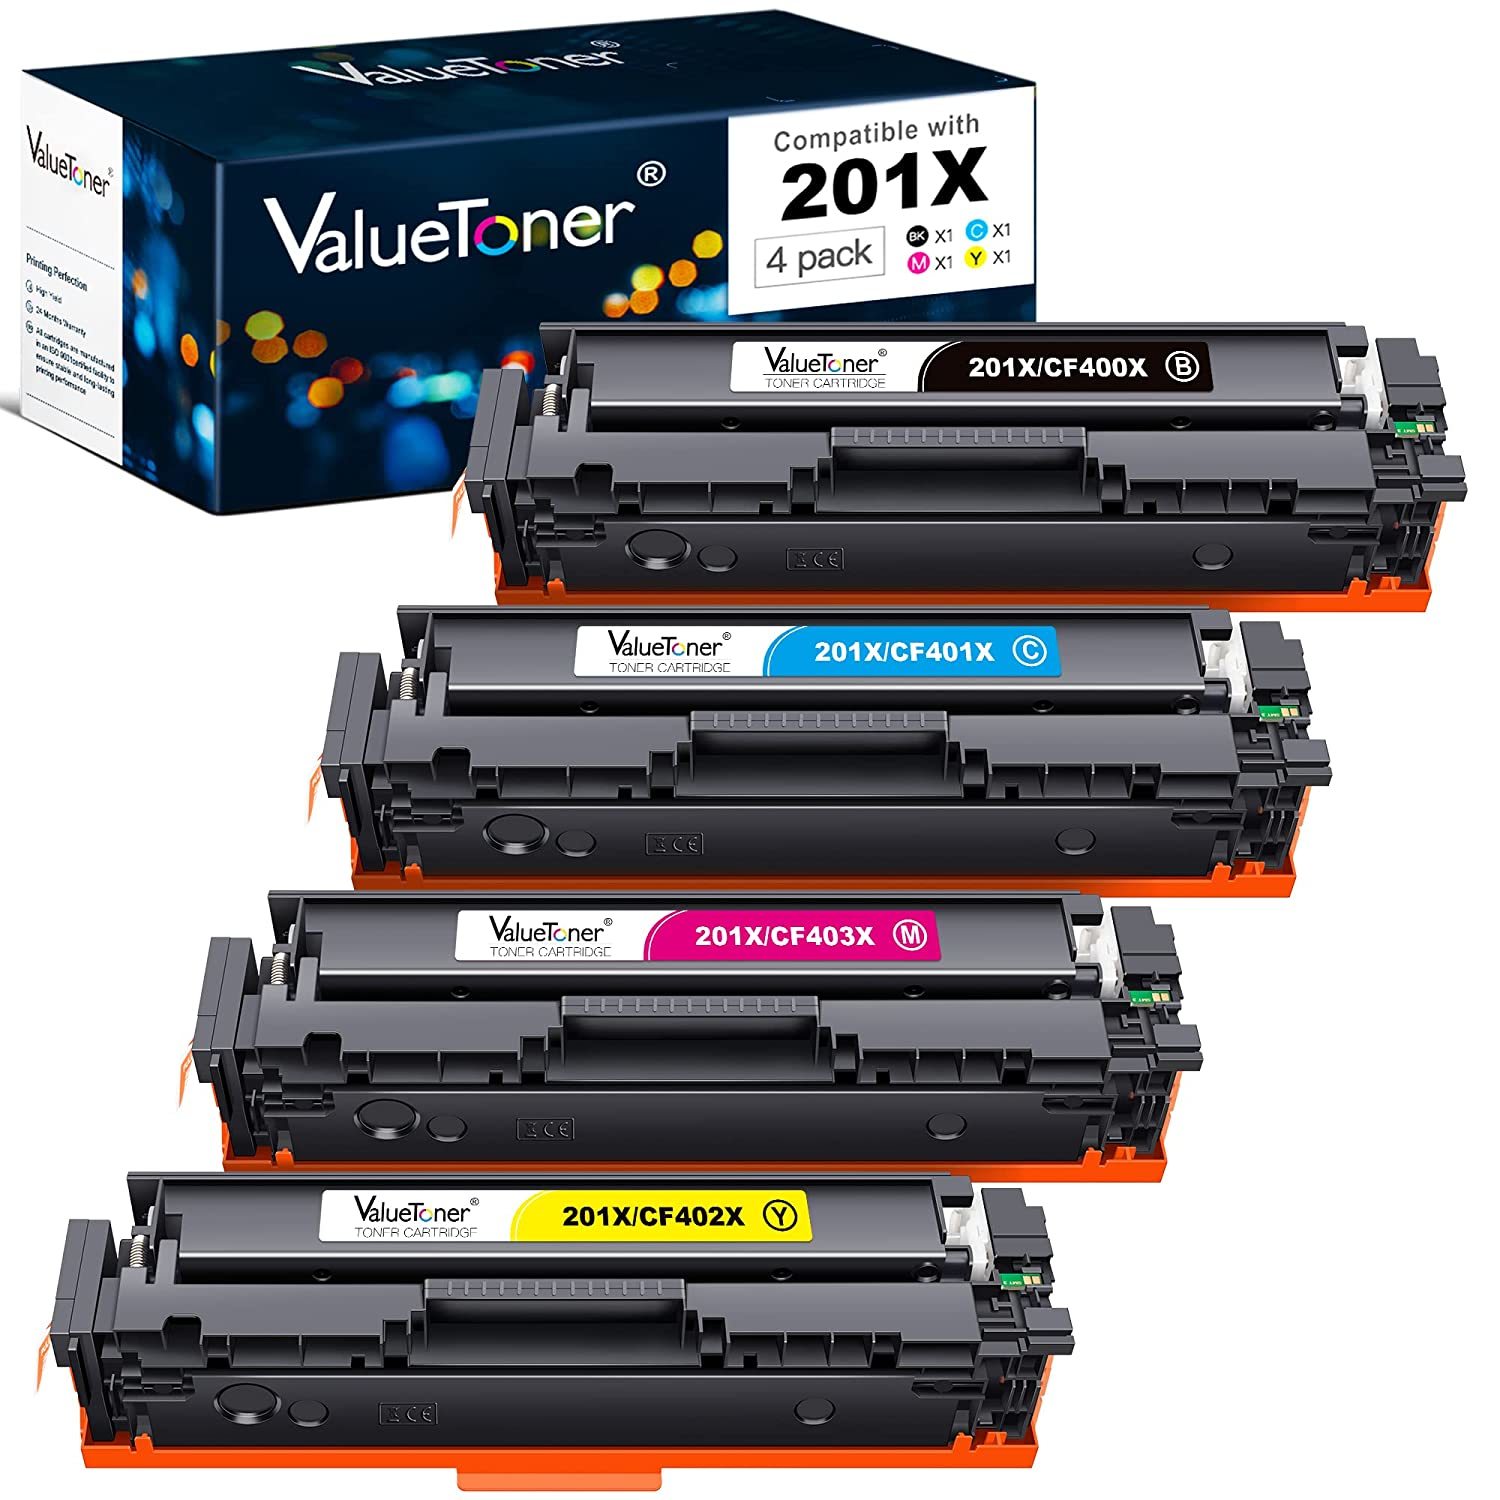 Valuetoner Compatible Toner Cartridge Replacement for HP 201X 201A CF400X CF401X